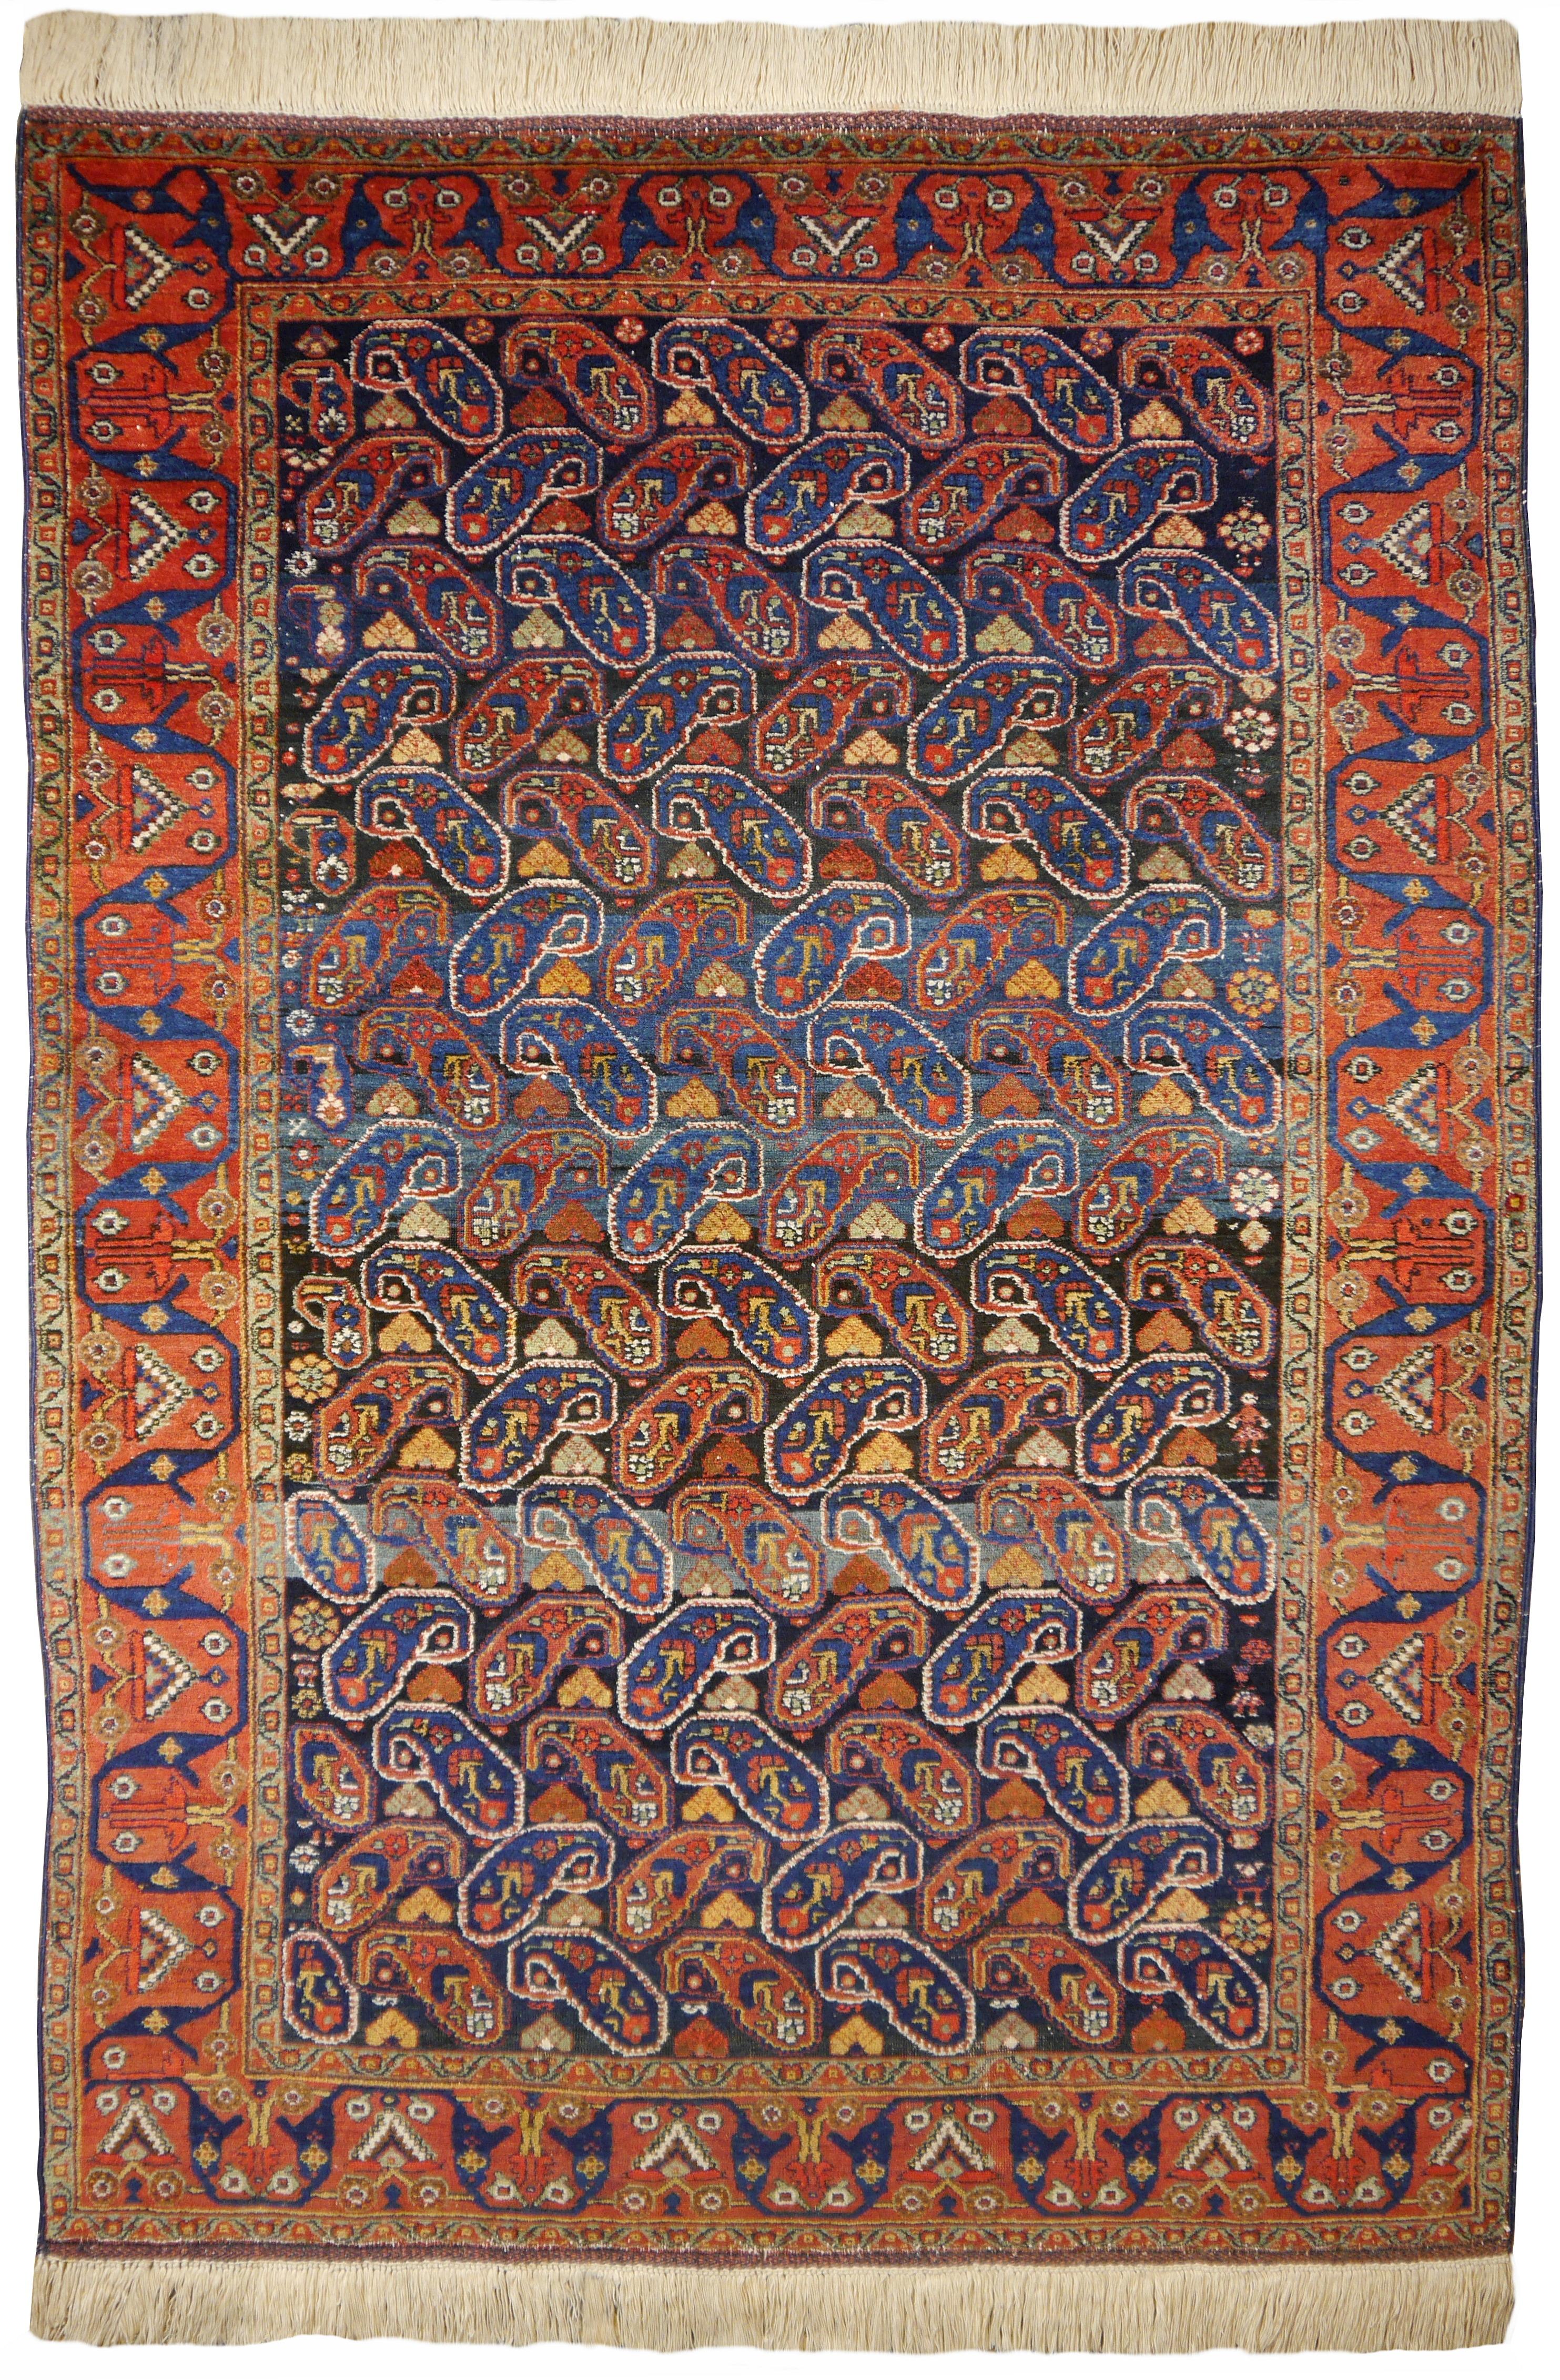 Hand-Knotted Afshari antique rug  6.8 x 4.8 ft natural color Bothe design blue rust For Sale